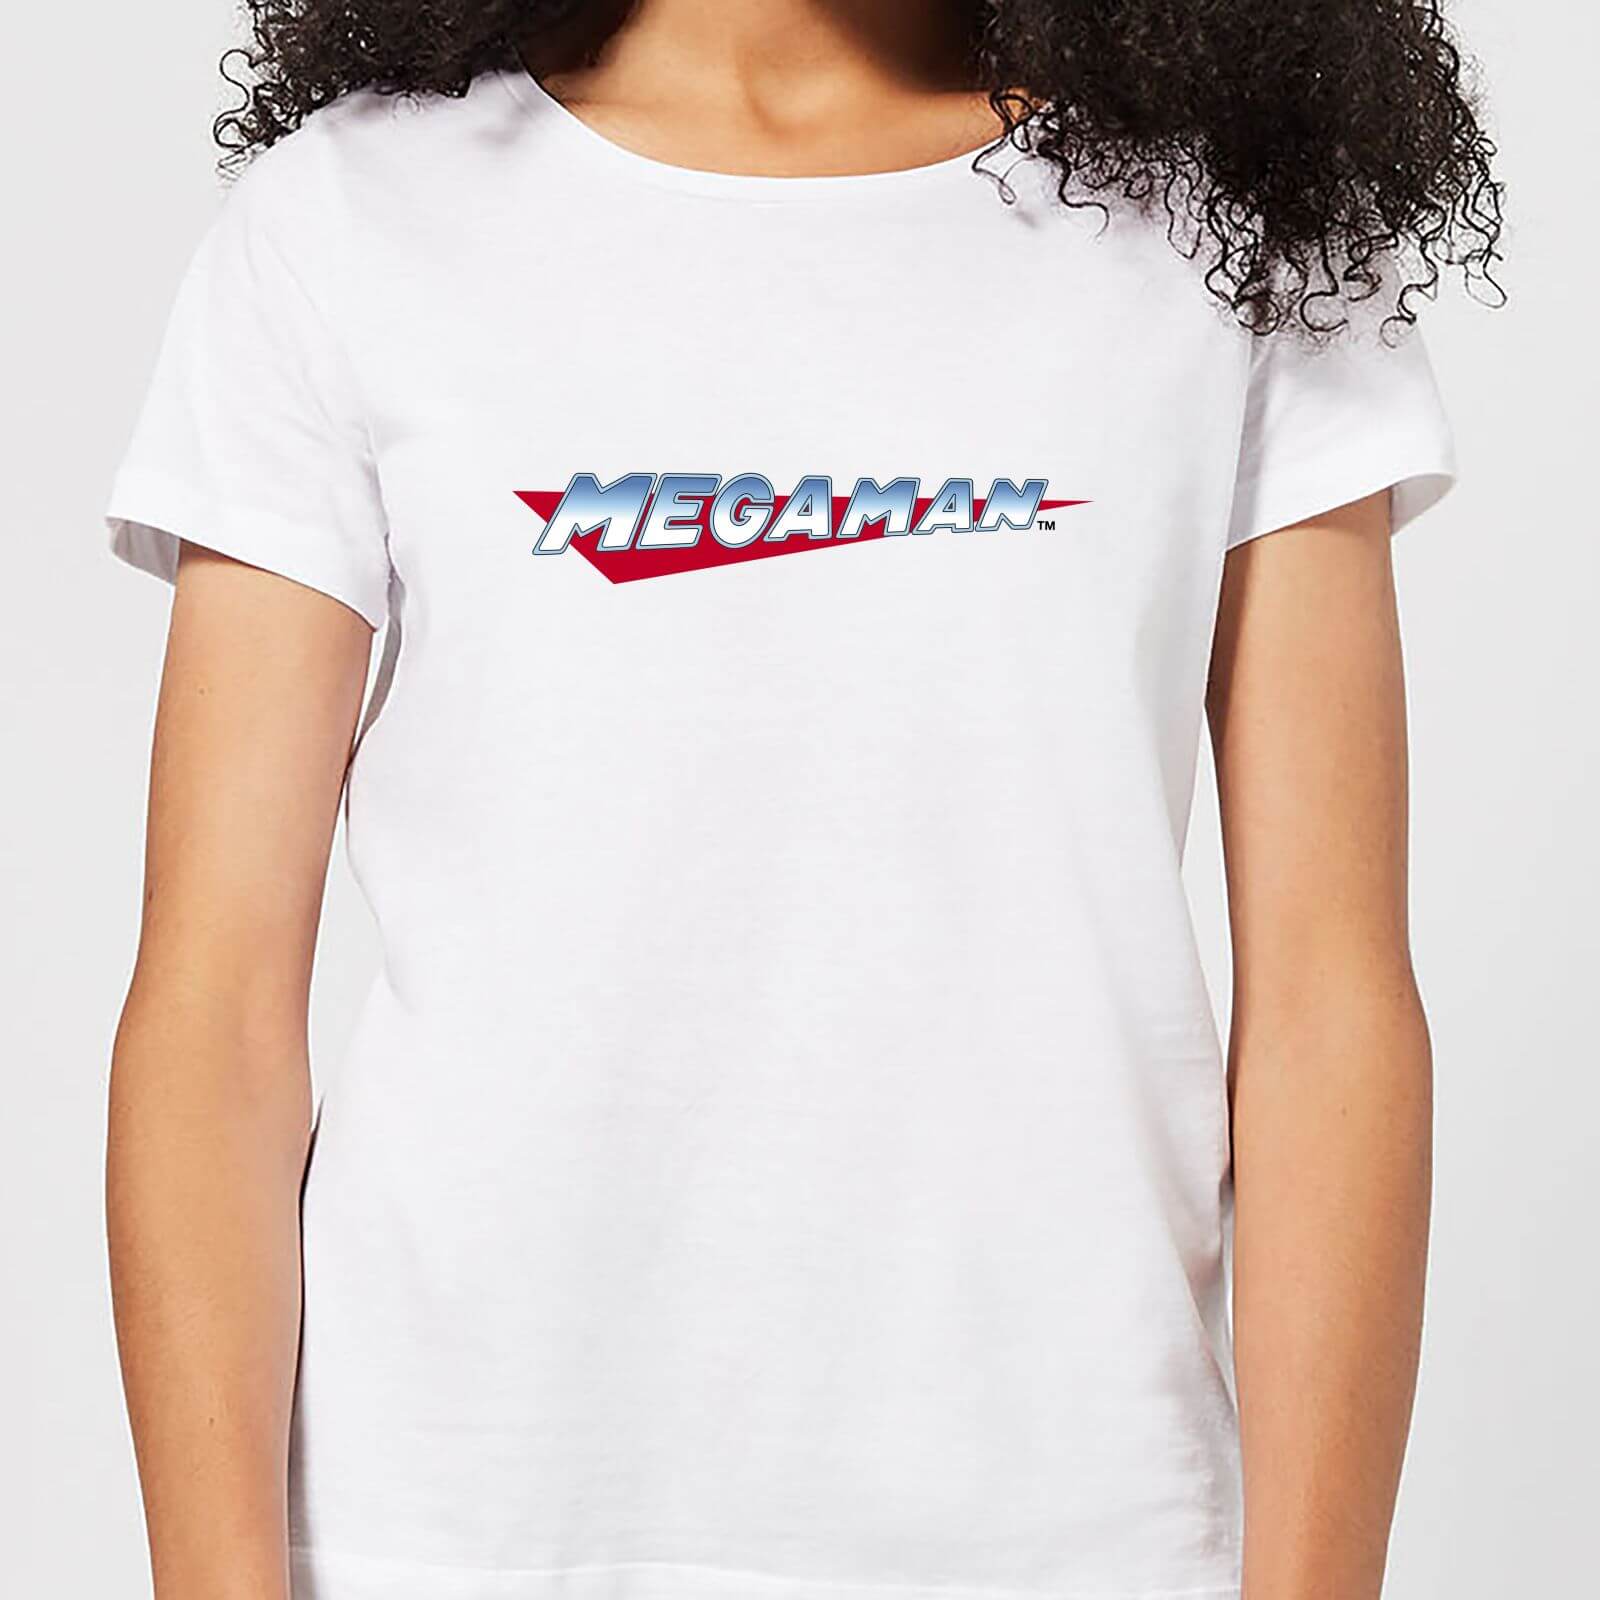 Mega Man Logo Women's T-Shirt - White - 3XL - White